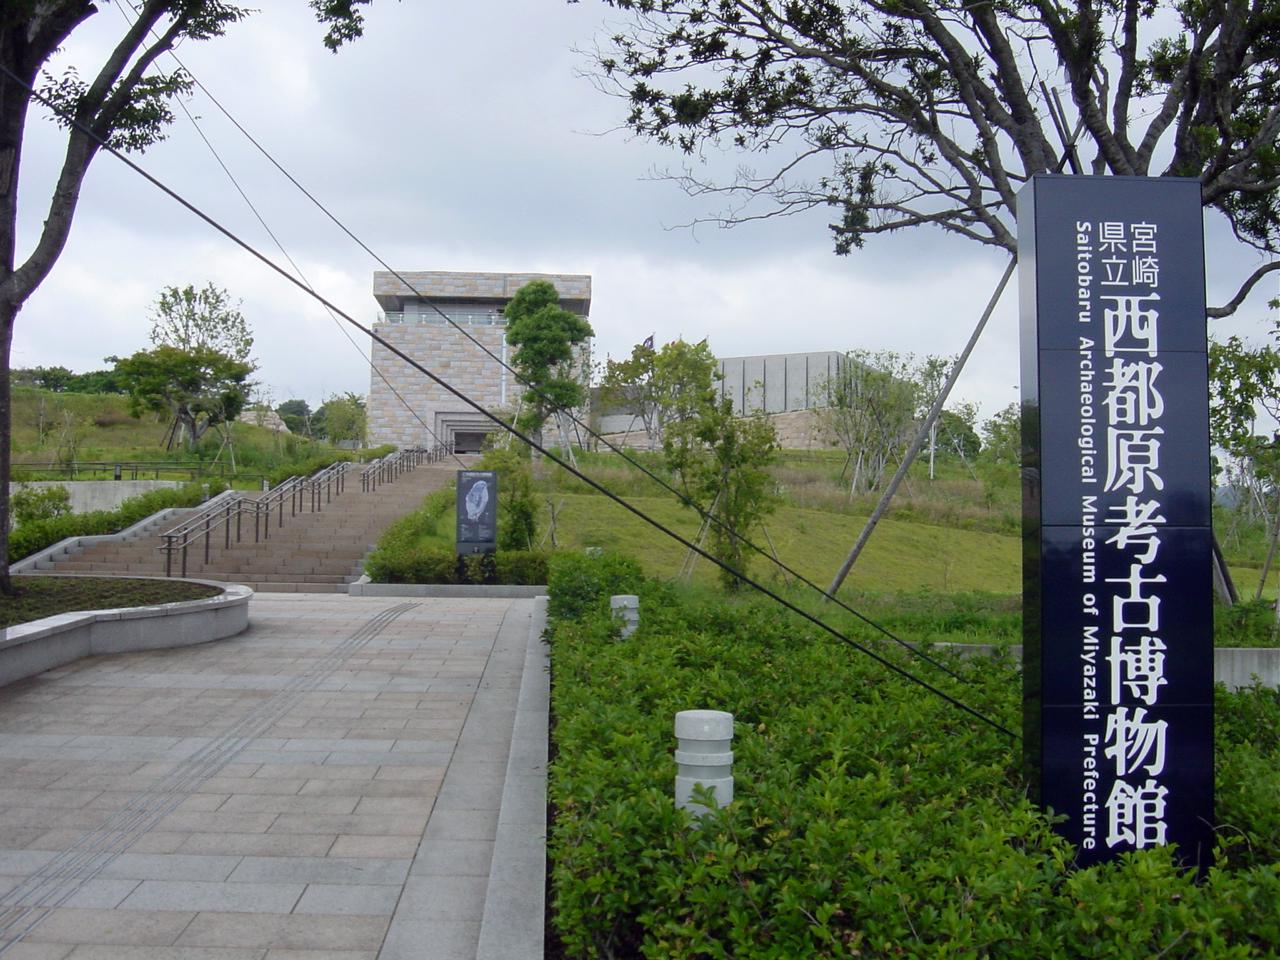 Saitobaru Archaelogical Museum of Miyazaki Prefecture